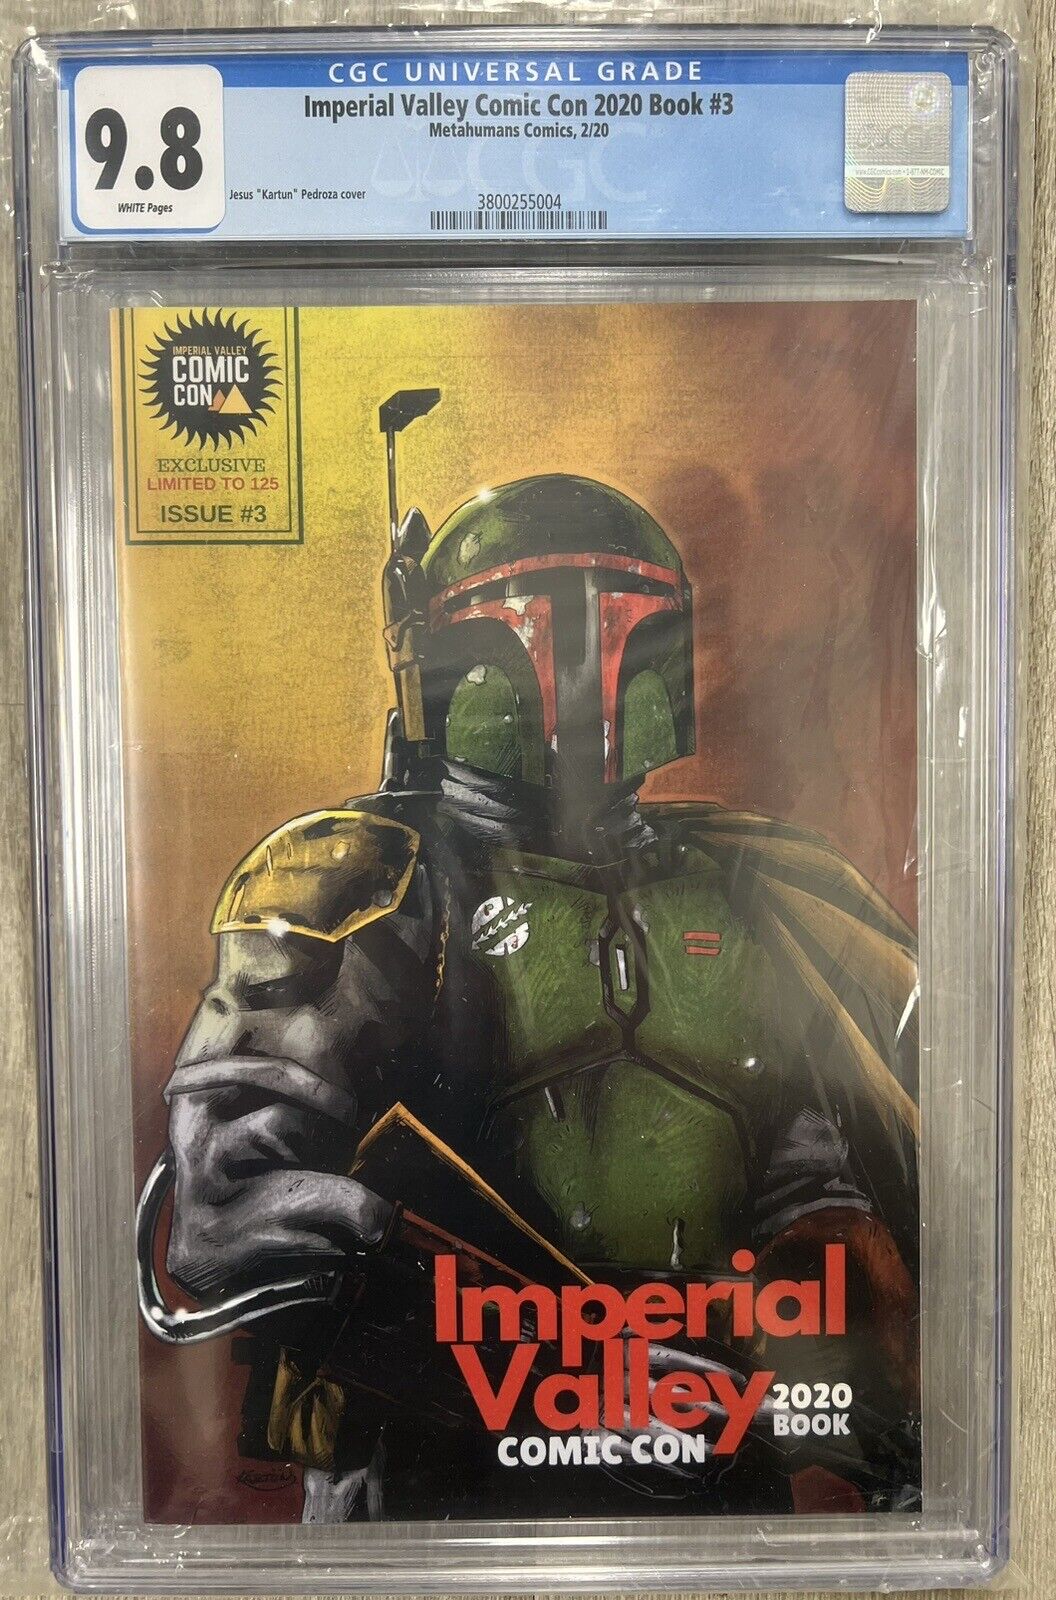 Imperial Valley Comic Con 2020 CGC 9.8 Star Wars Boba Fett 125 copies EXCLUSIVE